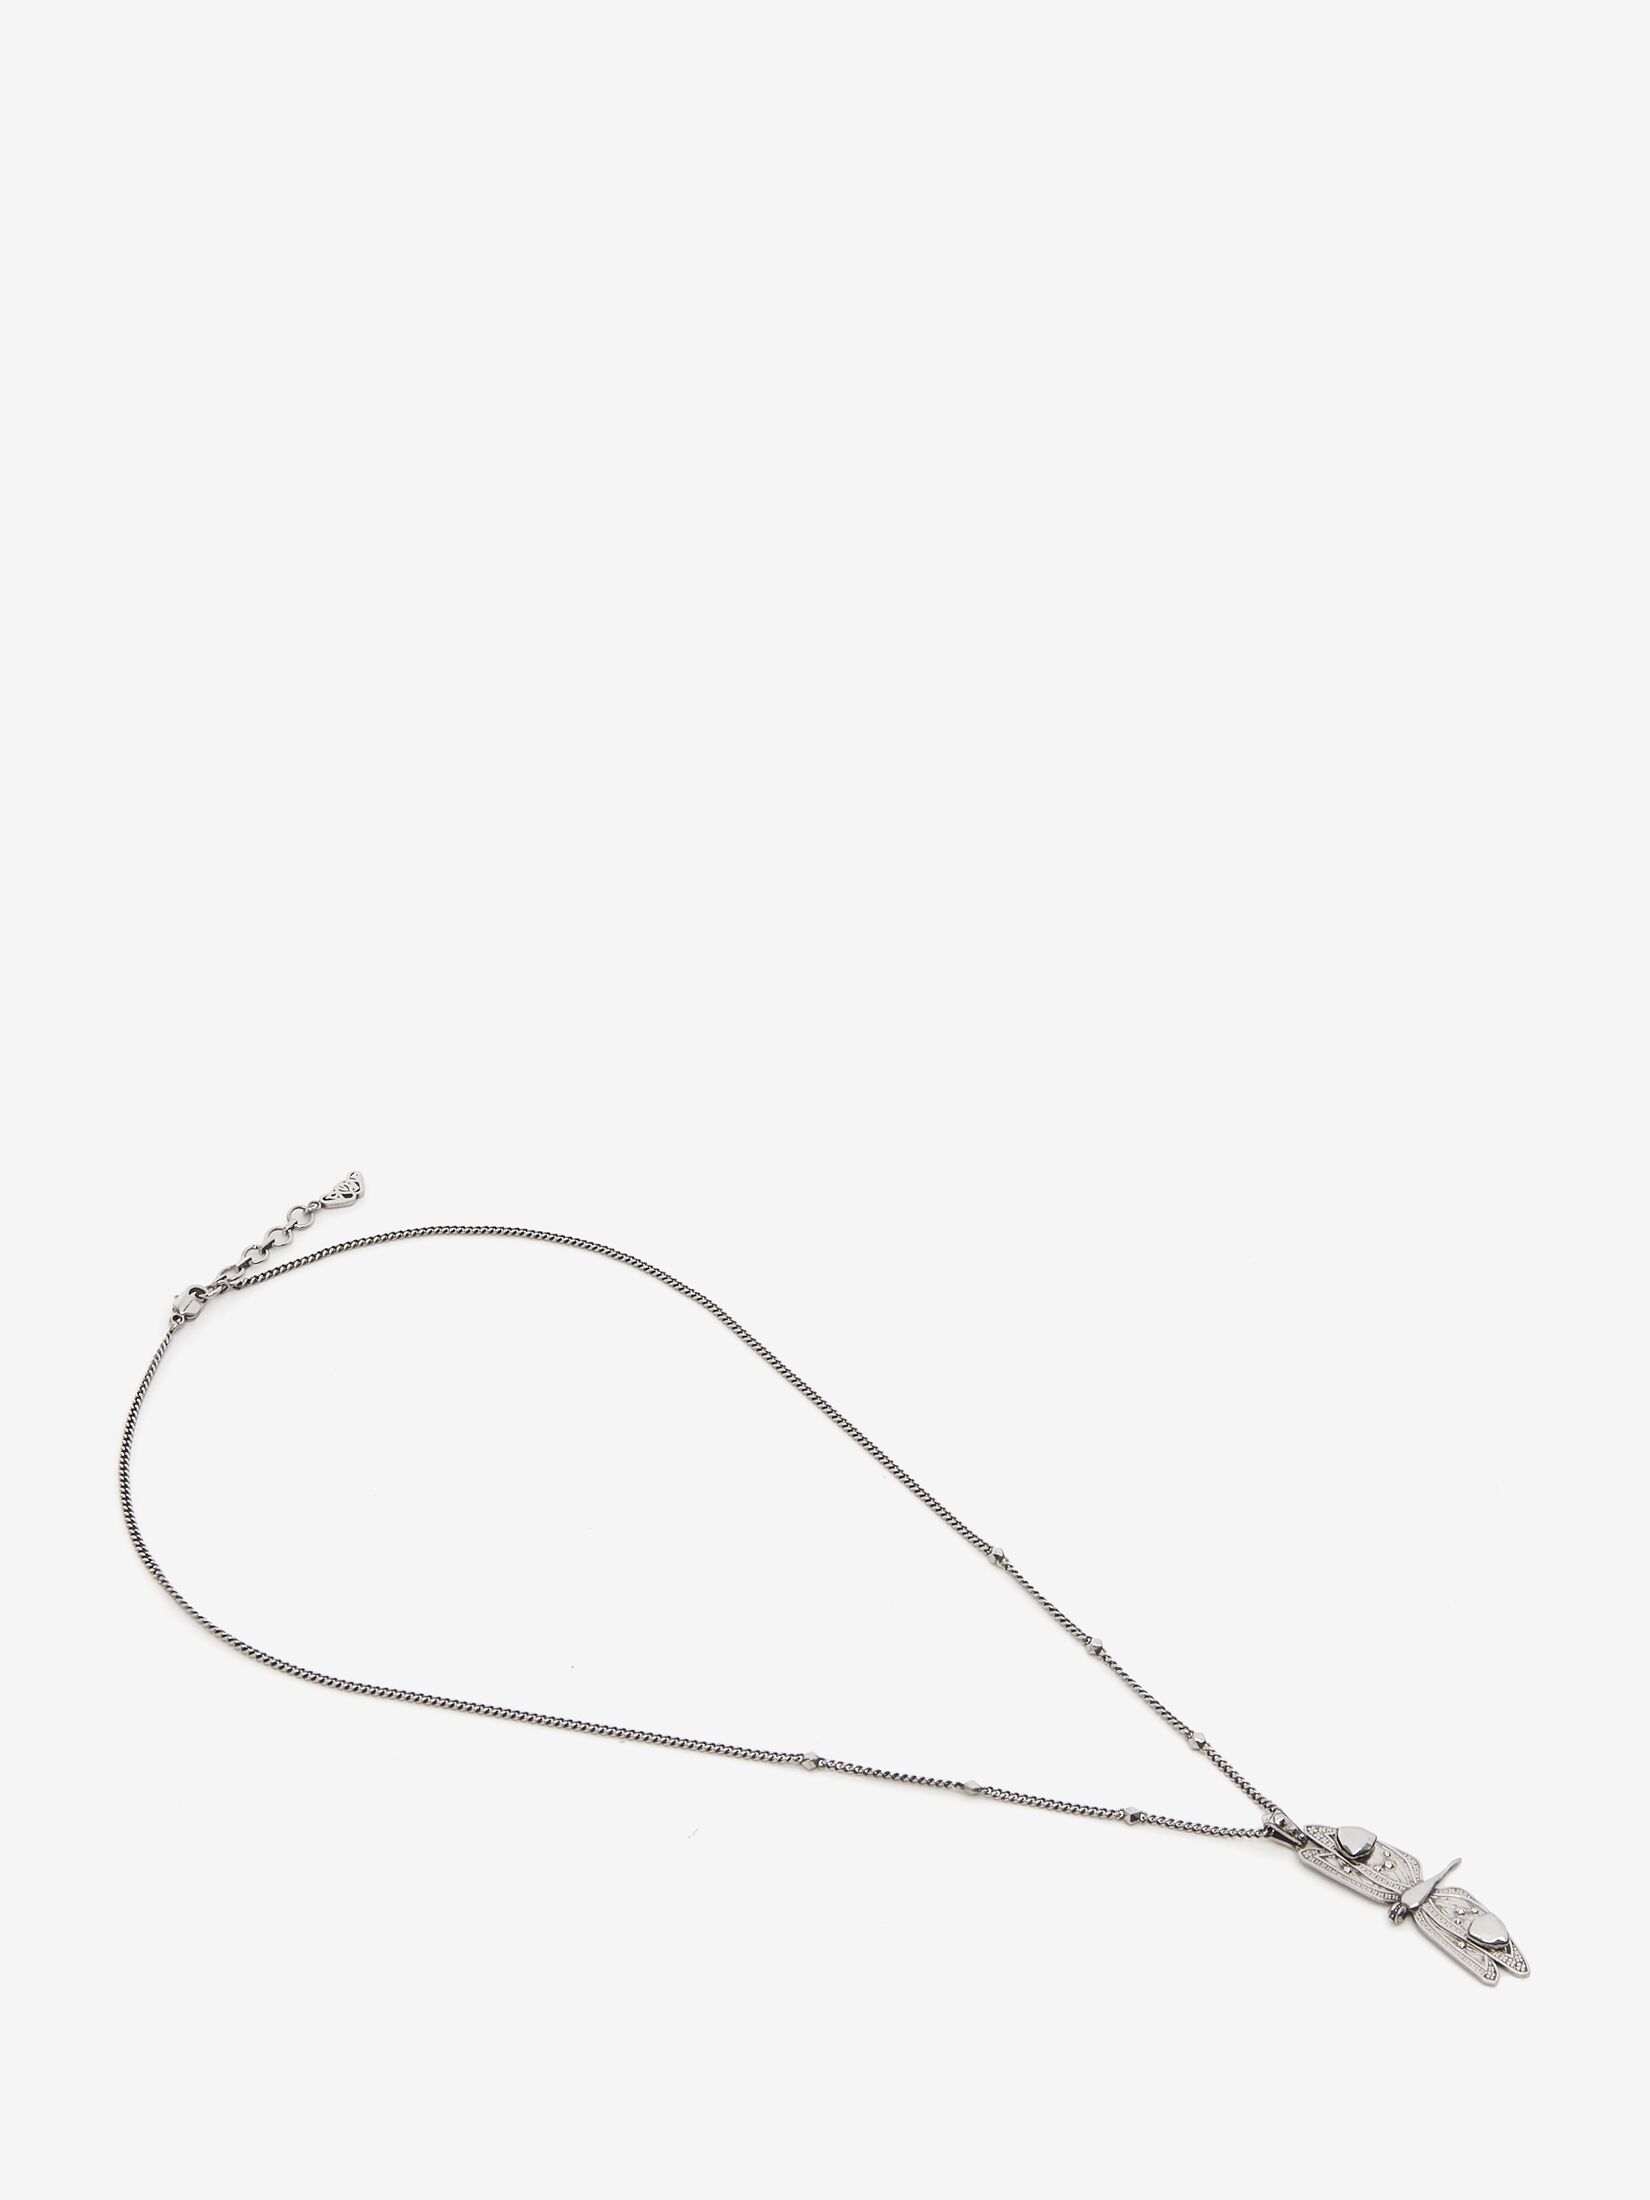 Halskette mit Dragonfly-Motiv